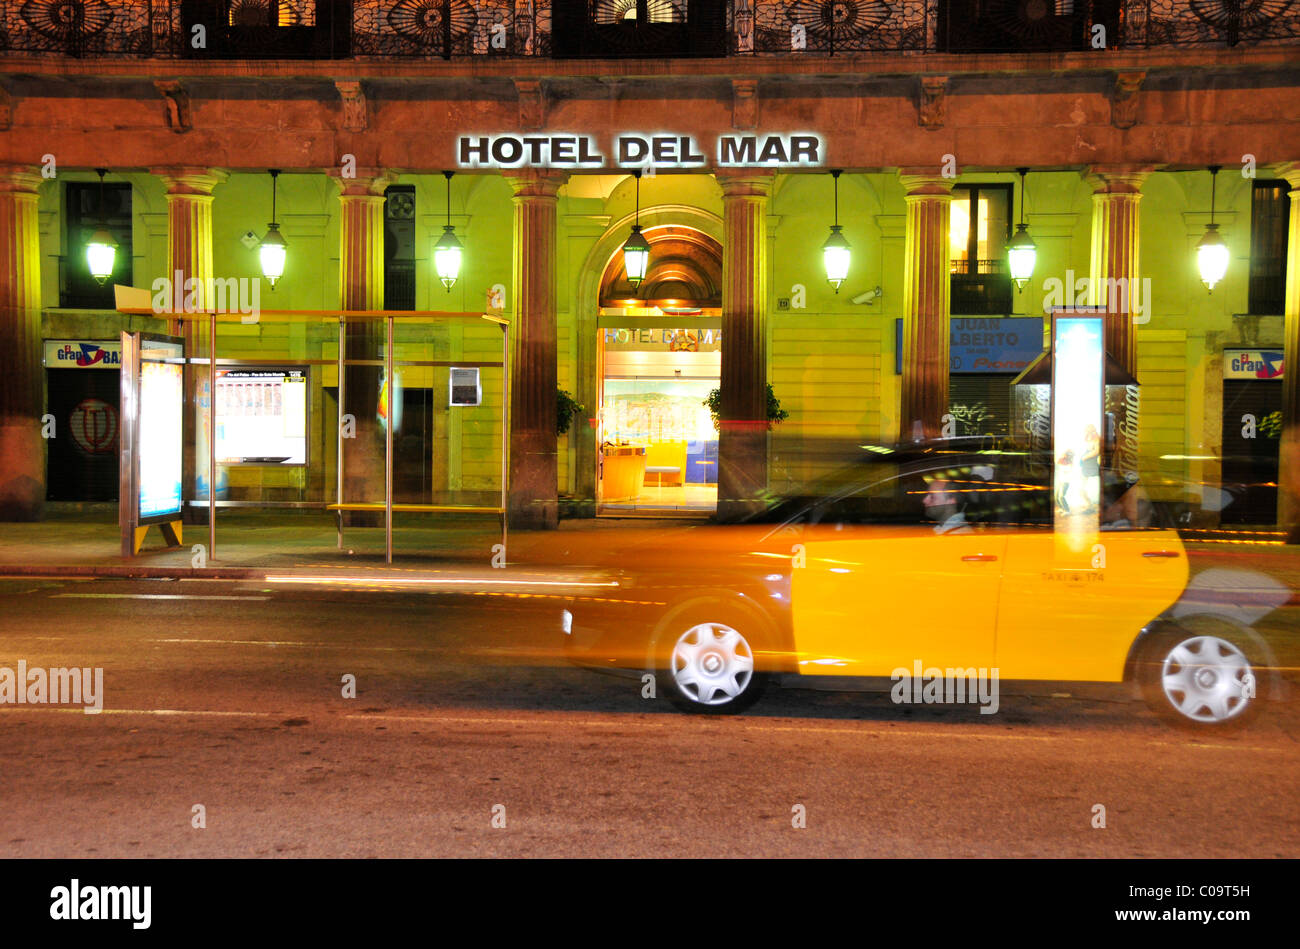 Taxi in front of the Hotel del Mar, Plaça del Palau, Barcelona, Spain, Iberian Peninsula, Europe Stock Photo